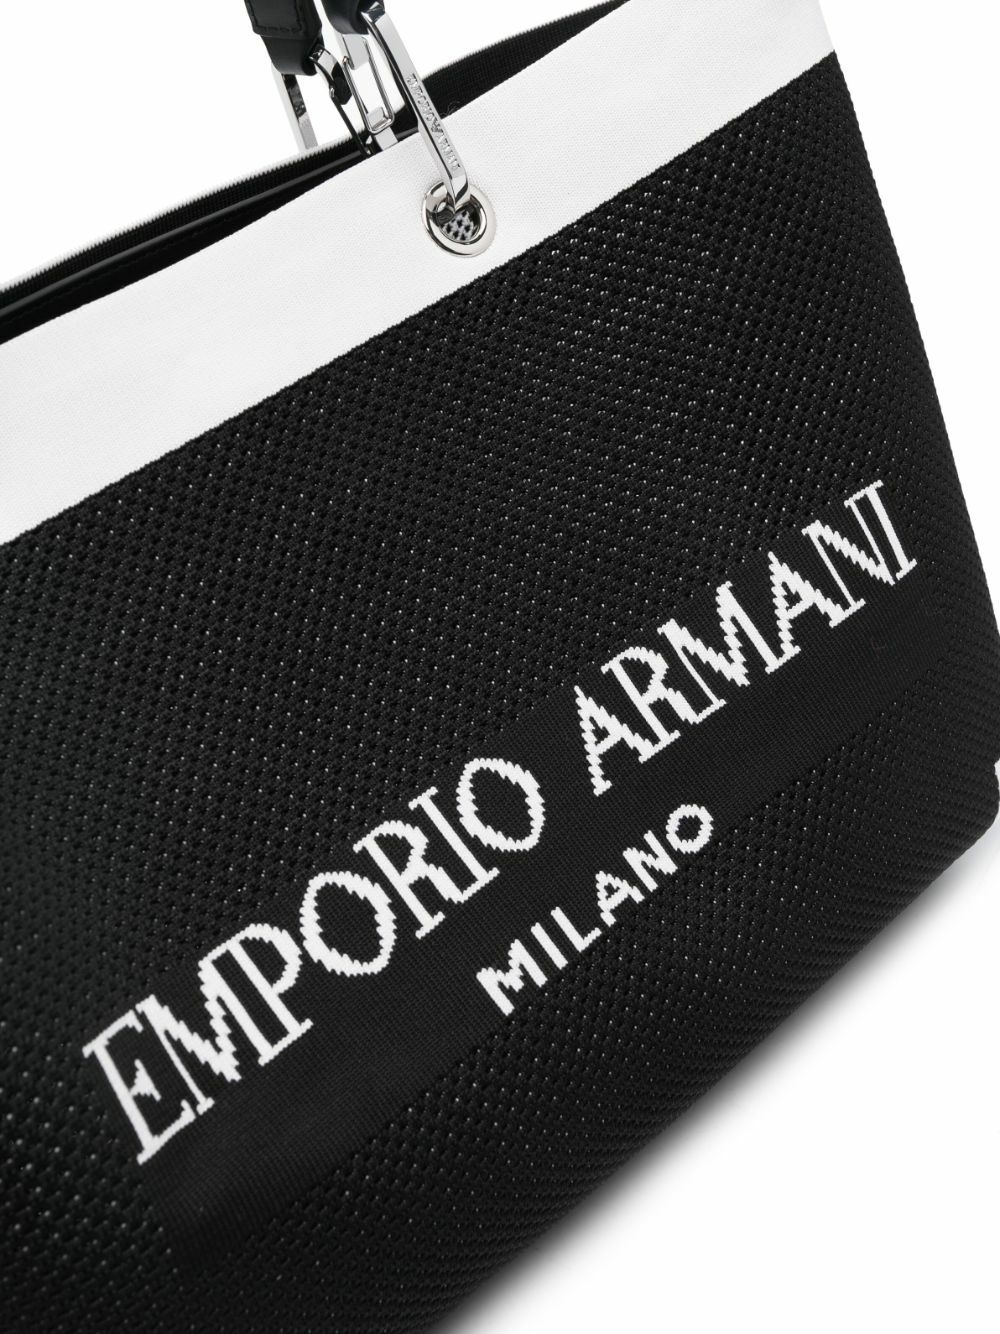 EMPORIO ARMANI - Medium Tote Bag